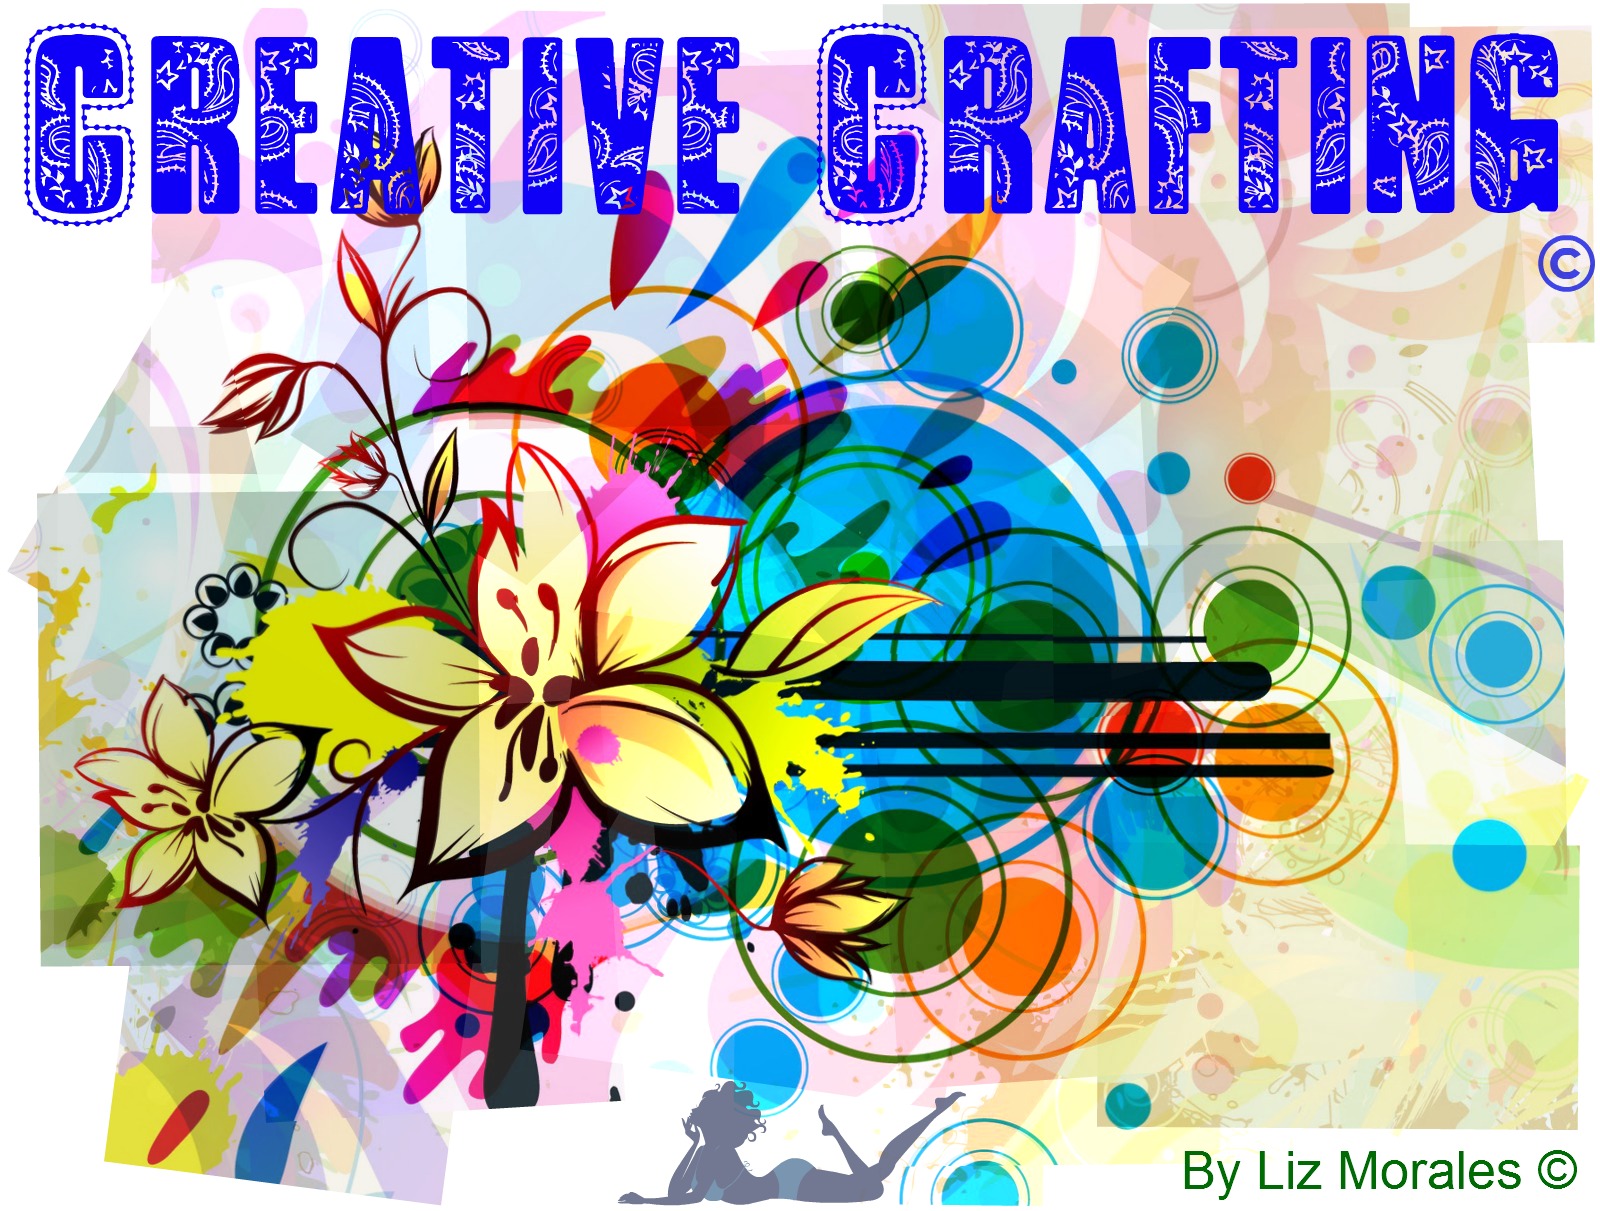 Creative Crafting!